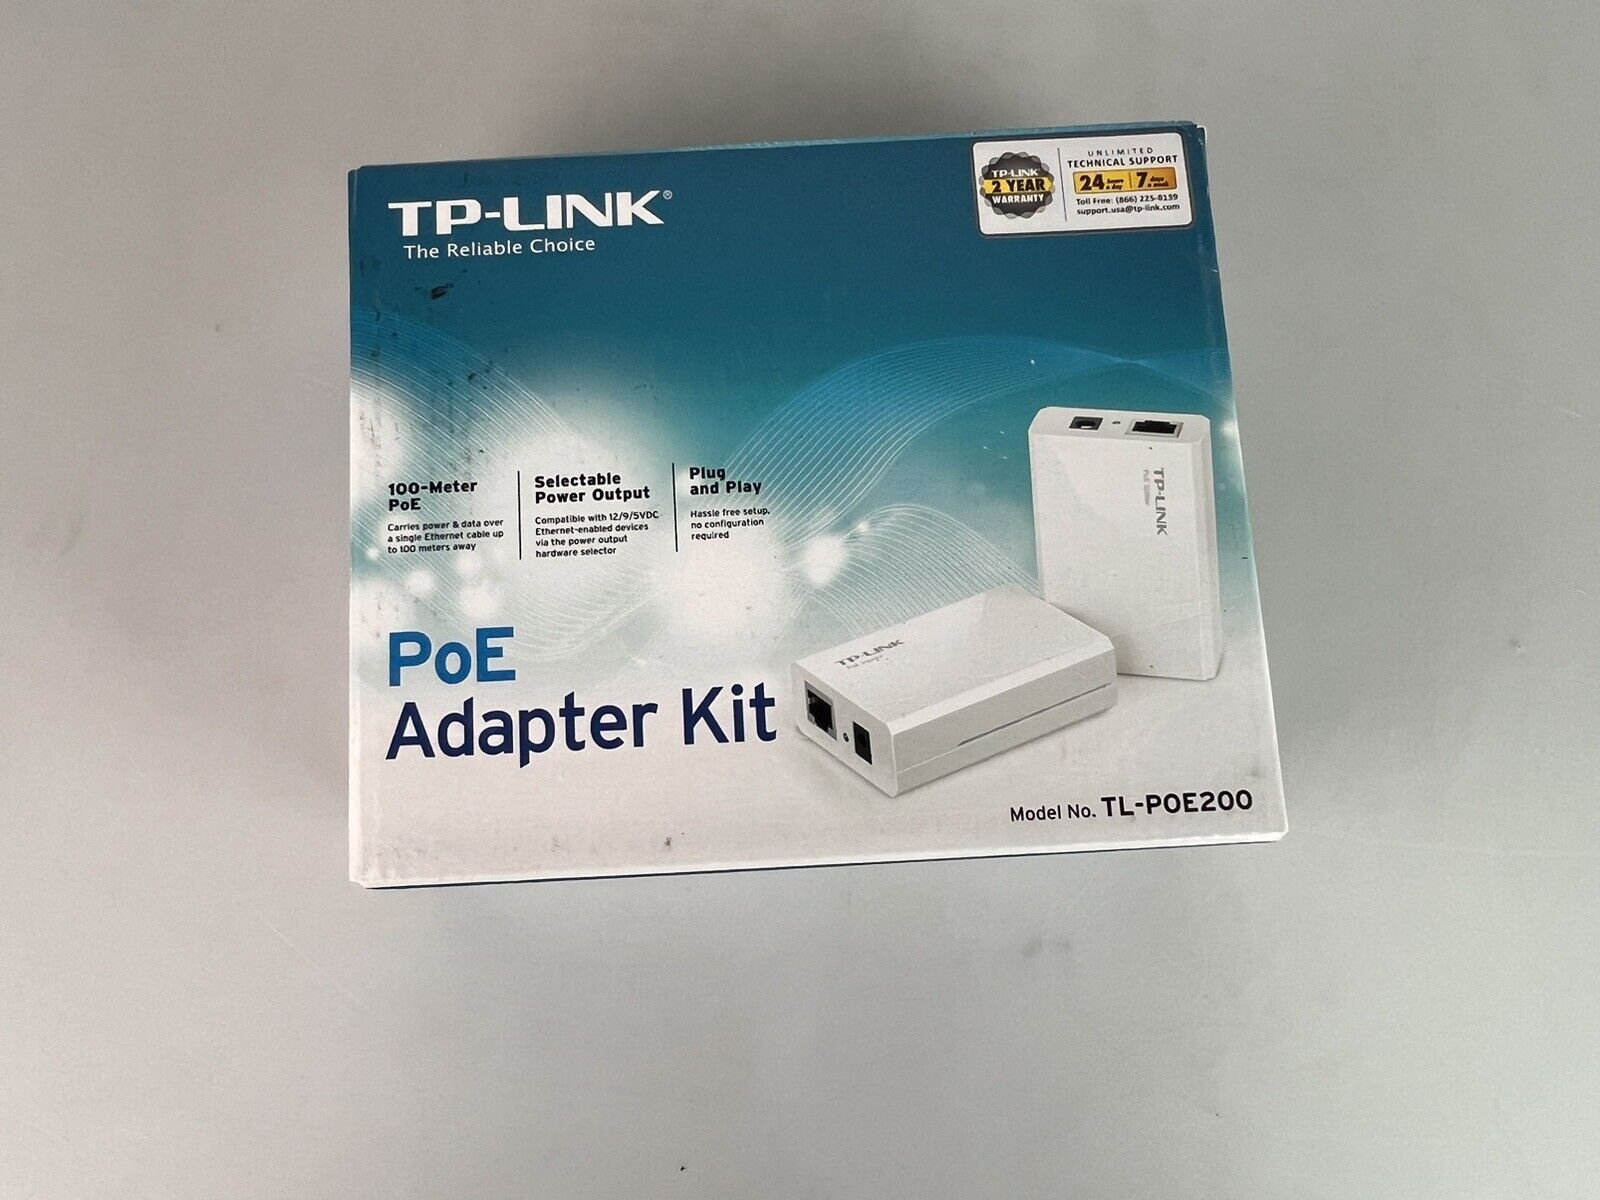 TP-LINK TL-POE200 Power over Ethernet Adapter Kit Rj45 100meter Selectable Power